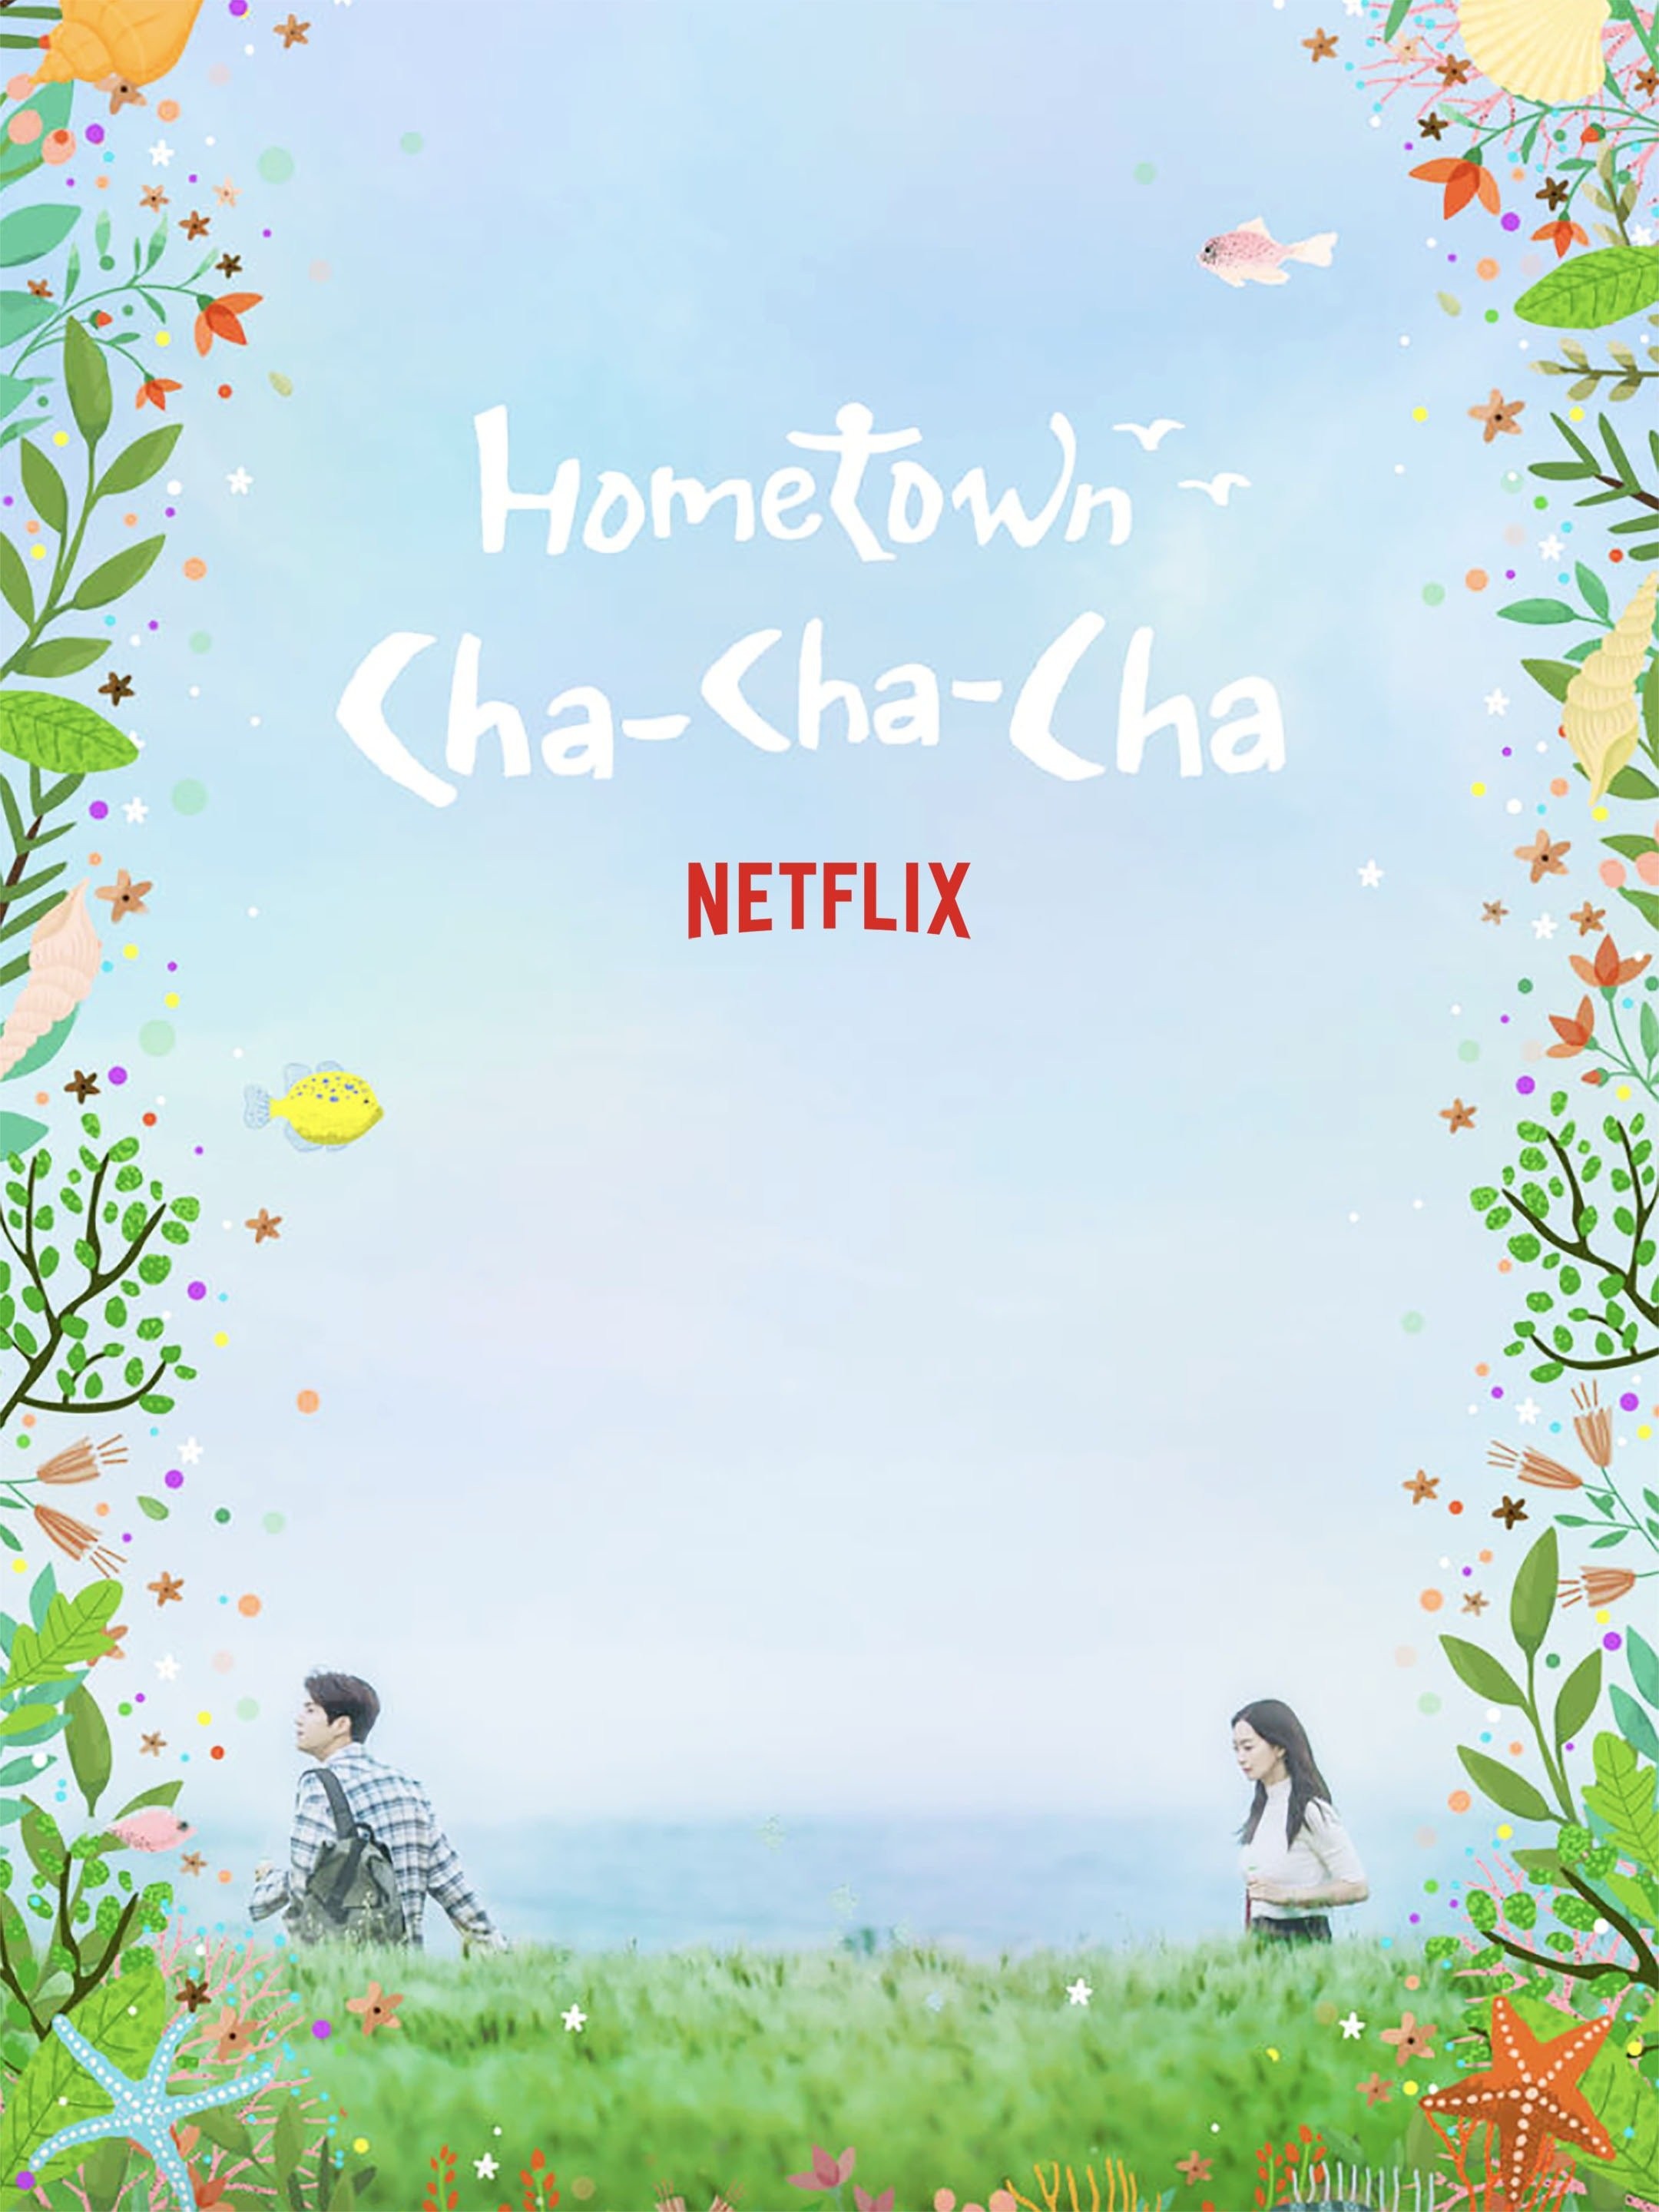 Watch Kim Seon-ho and Shin Min-a in charming new 'Hometown Cha-Cha